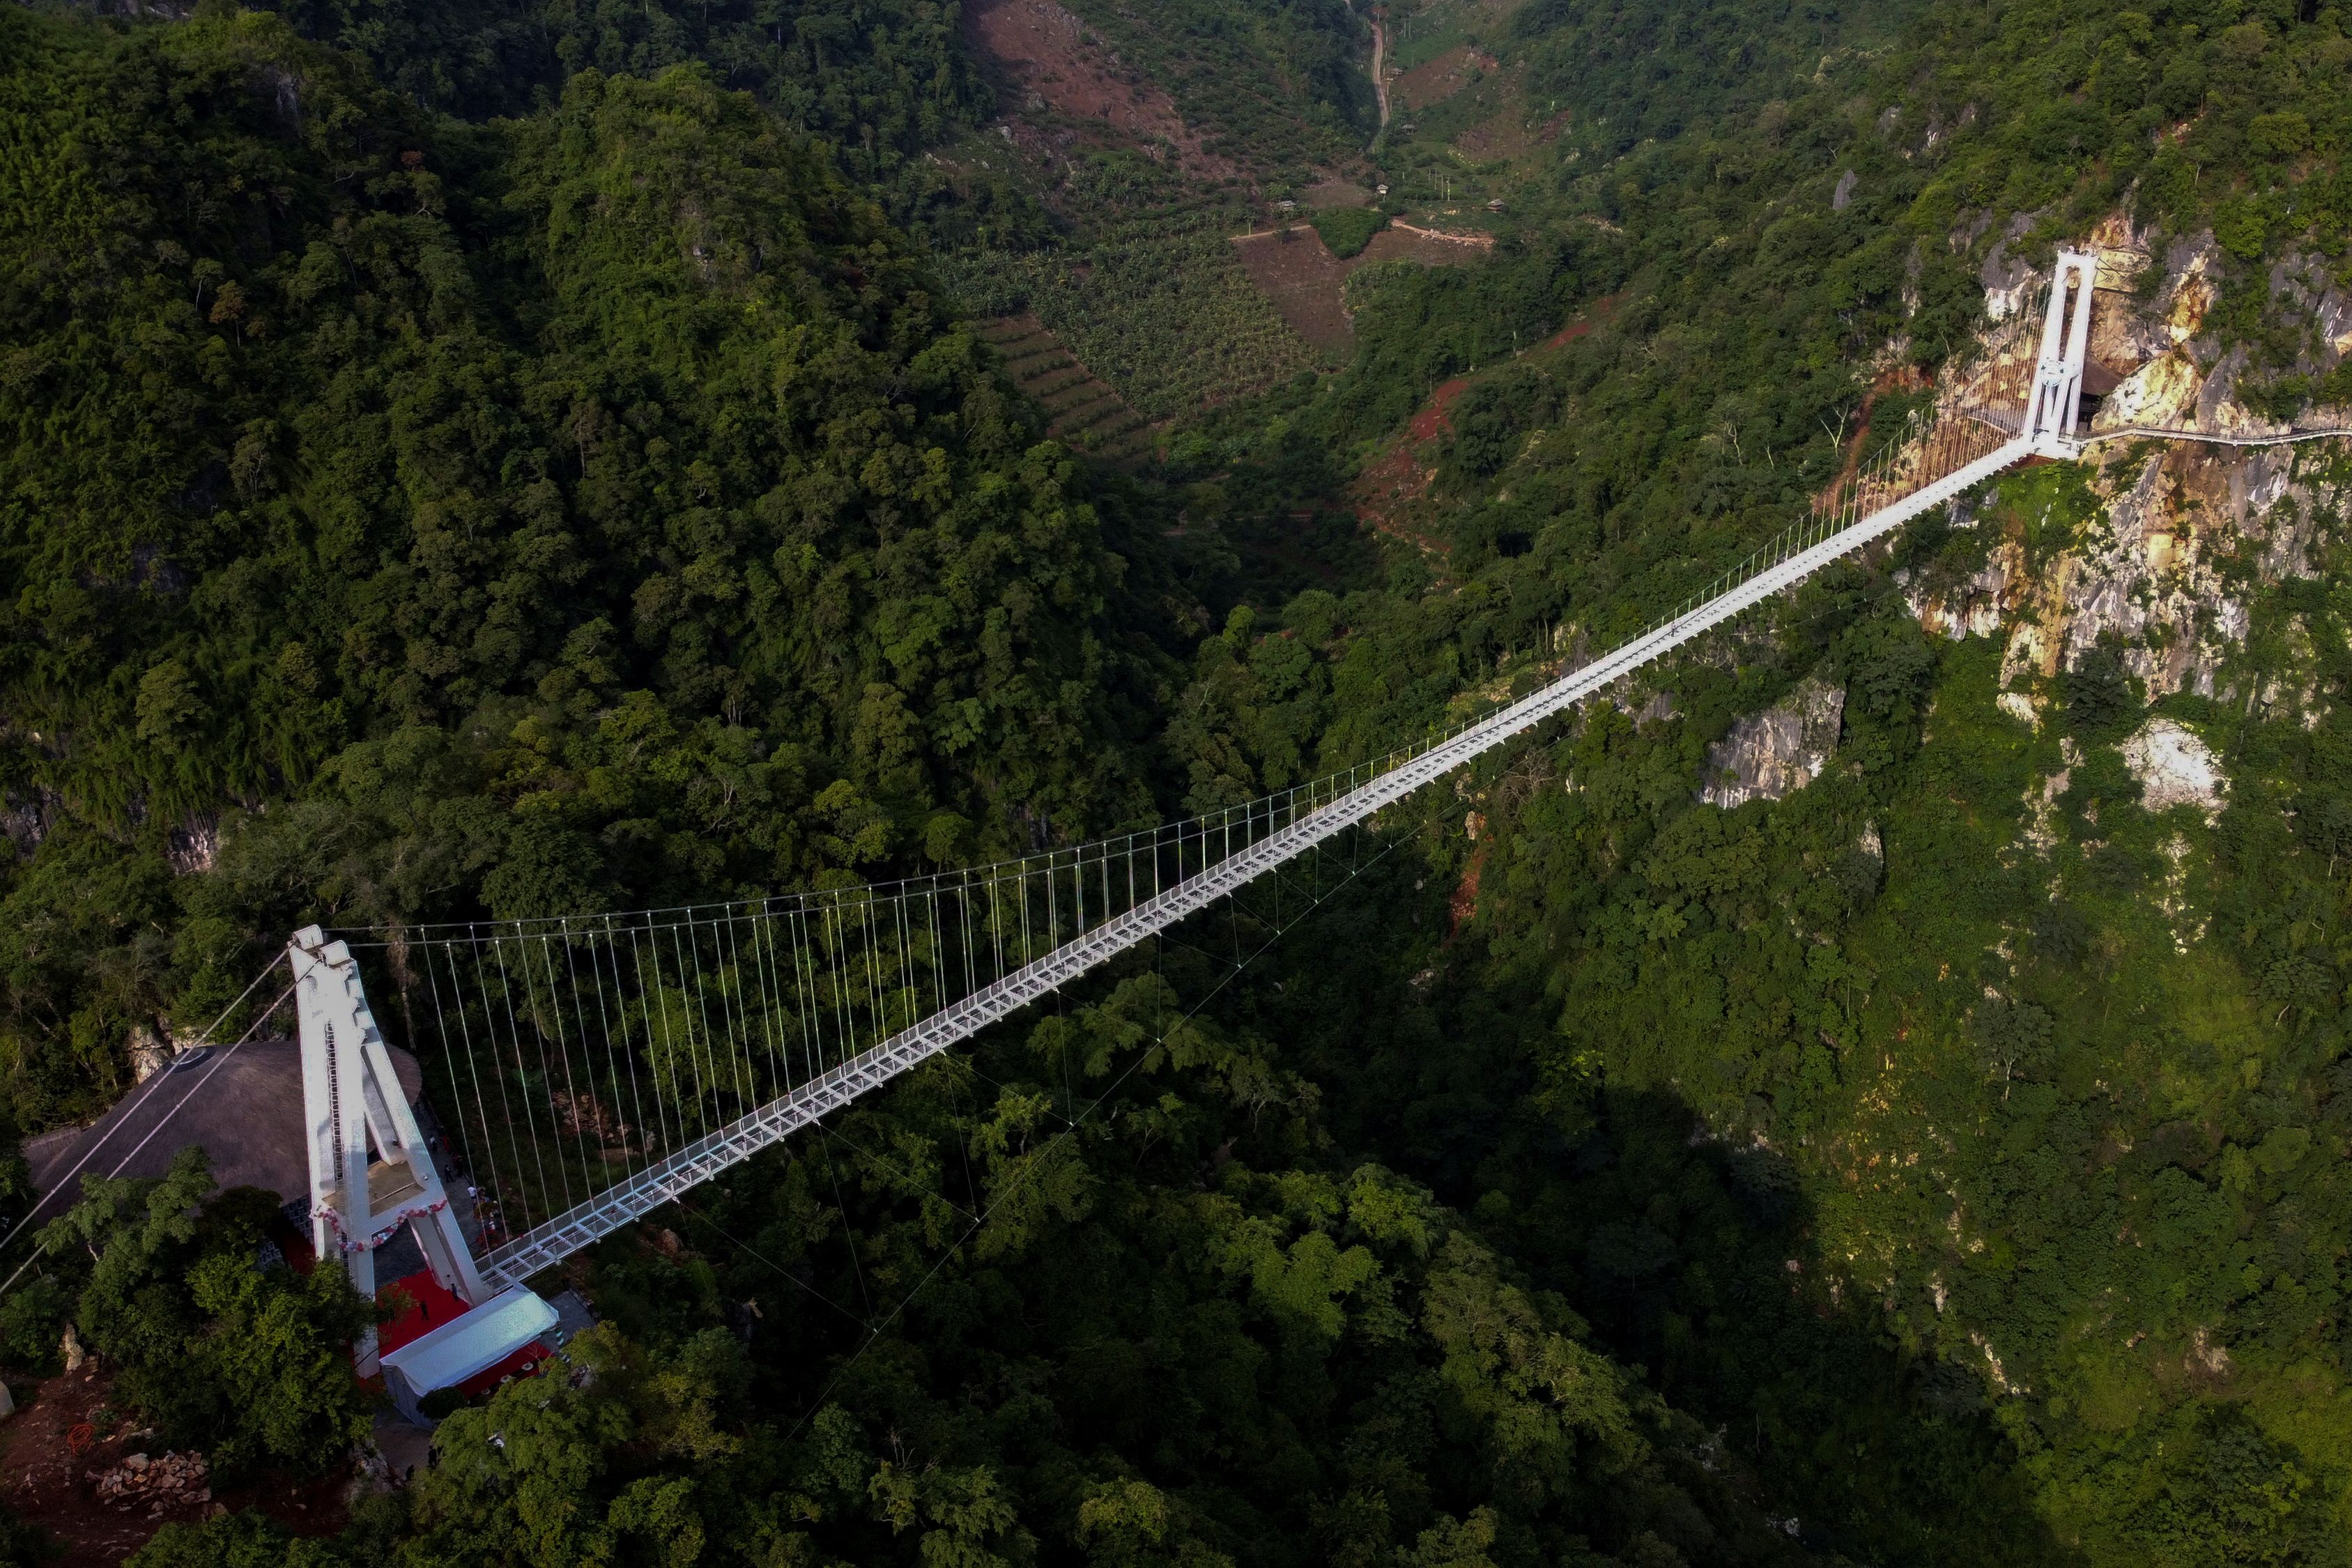 Vietnam opens the world's longest glass-bottom bridge in hopes to attract daring visitors